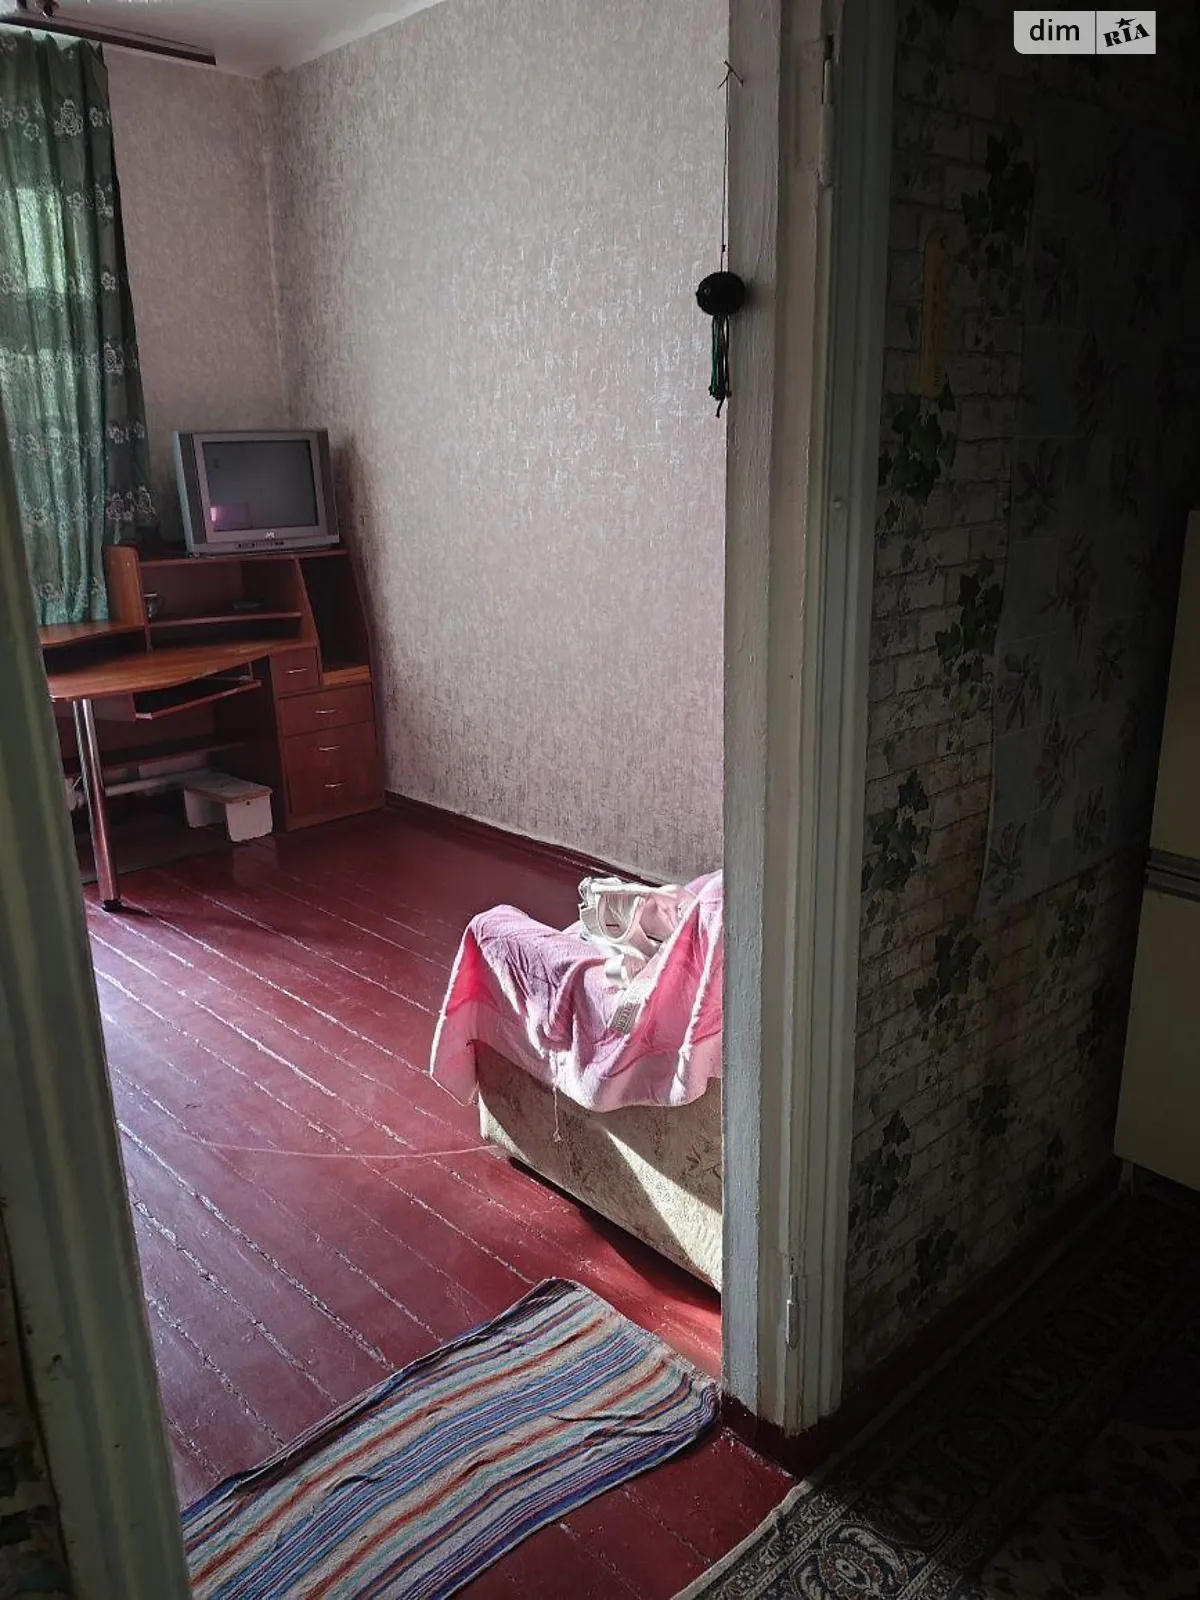 Продается комната 16 кв. м в Харькове - фото 3